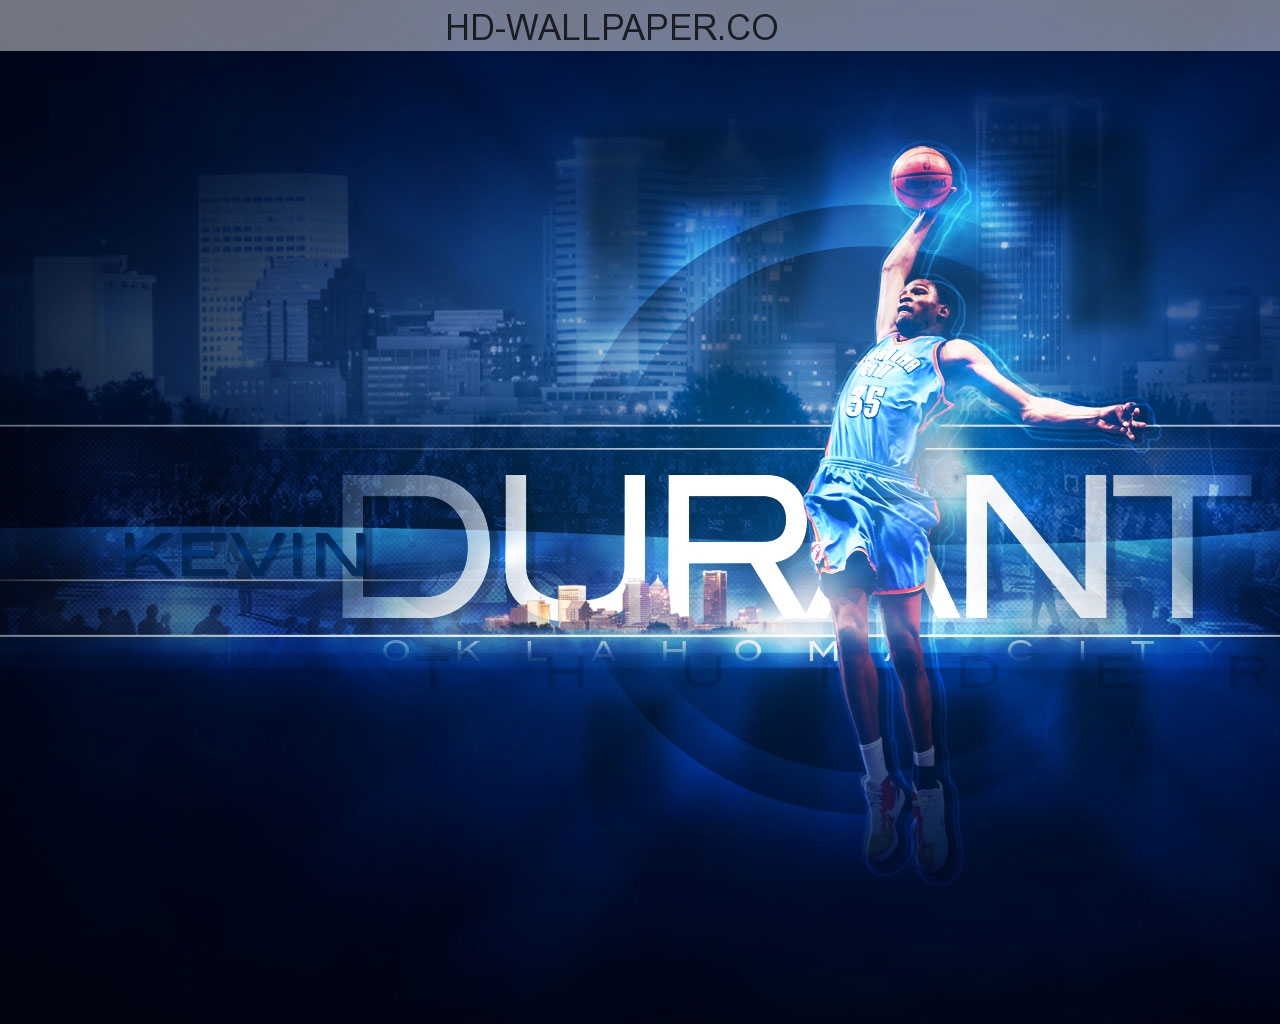 HD Wallpaper Co Kevin Durant Nba Jpg